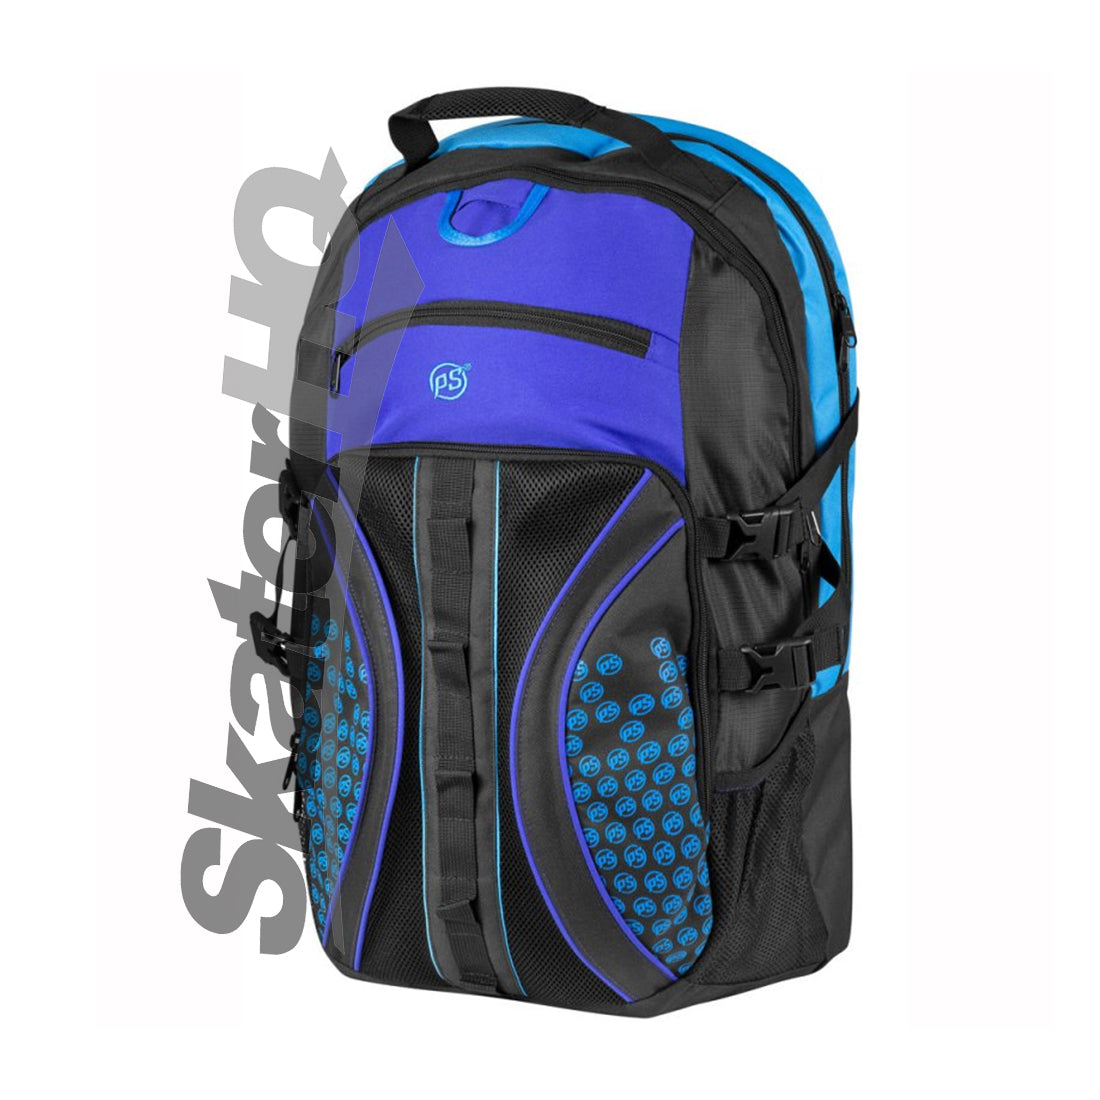 Powerslide Phuzion Skate Bag - Black/Blue Bags and Backpacks